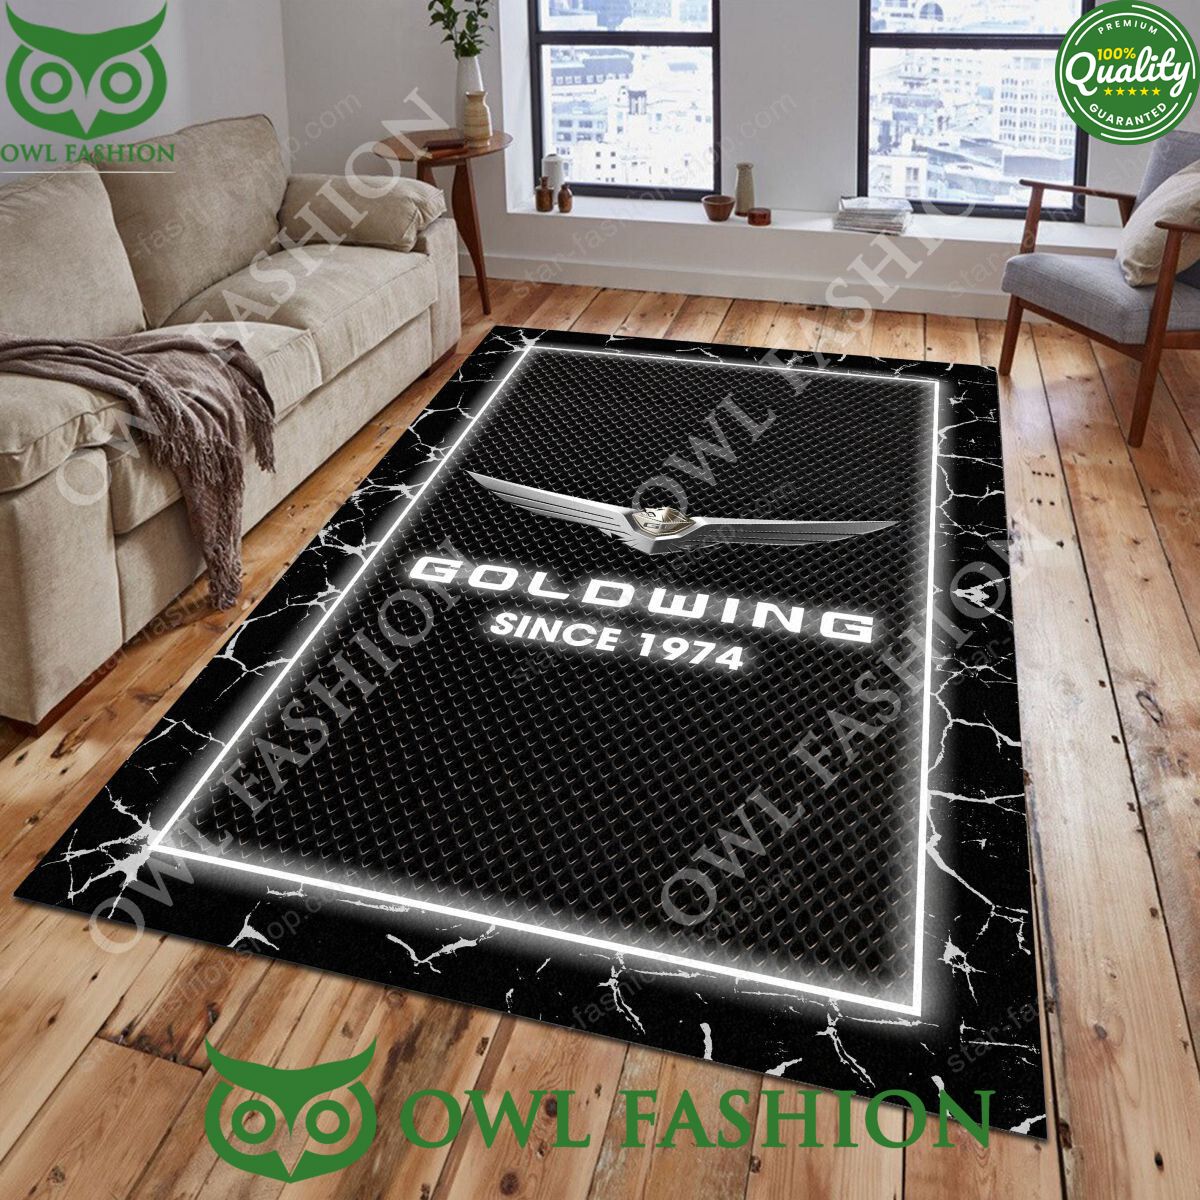 honda gold wing limited trending design carpet rug 1 zSRgg.jpg